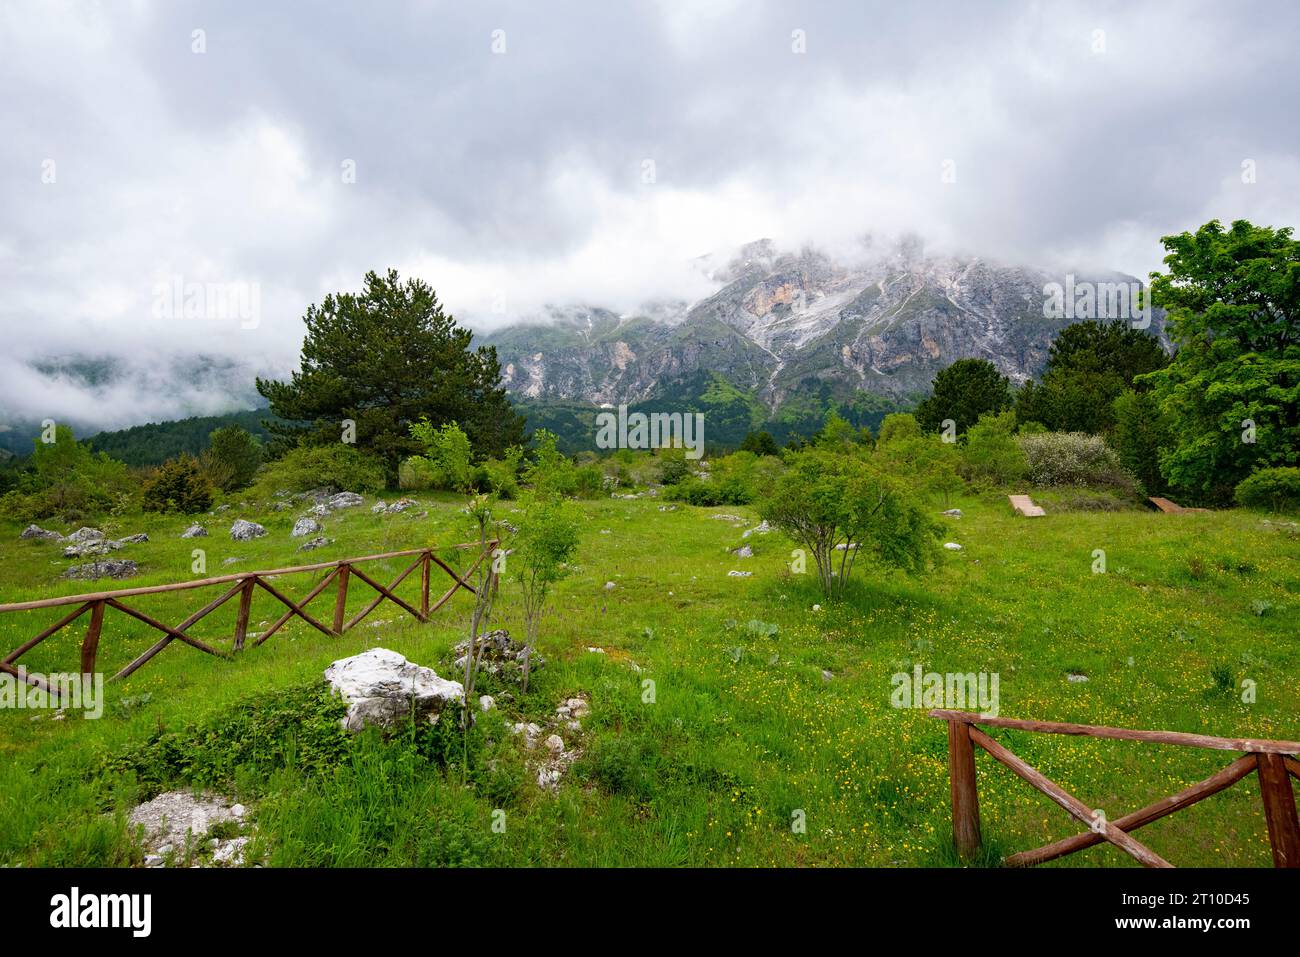 Monti Sibillini National Park - Italy Stock Photo